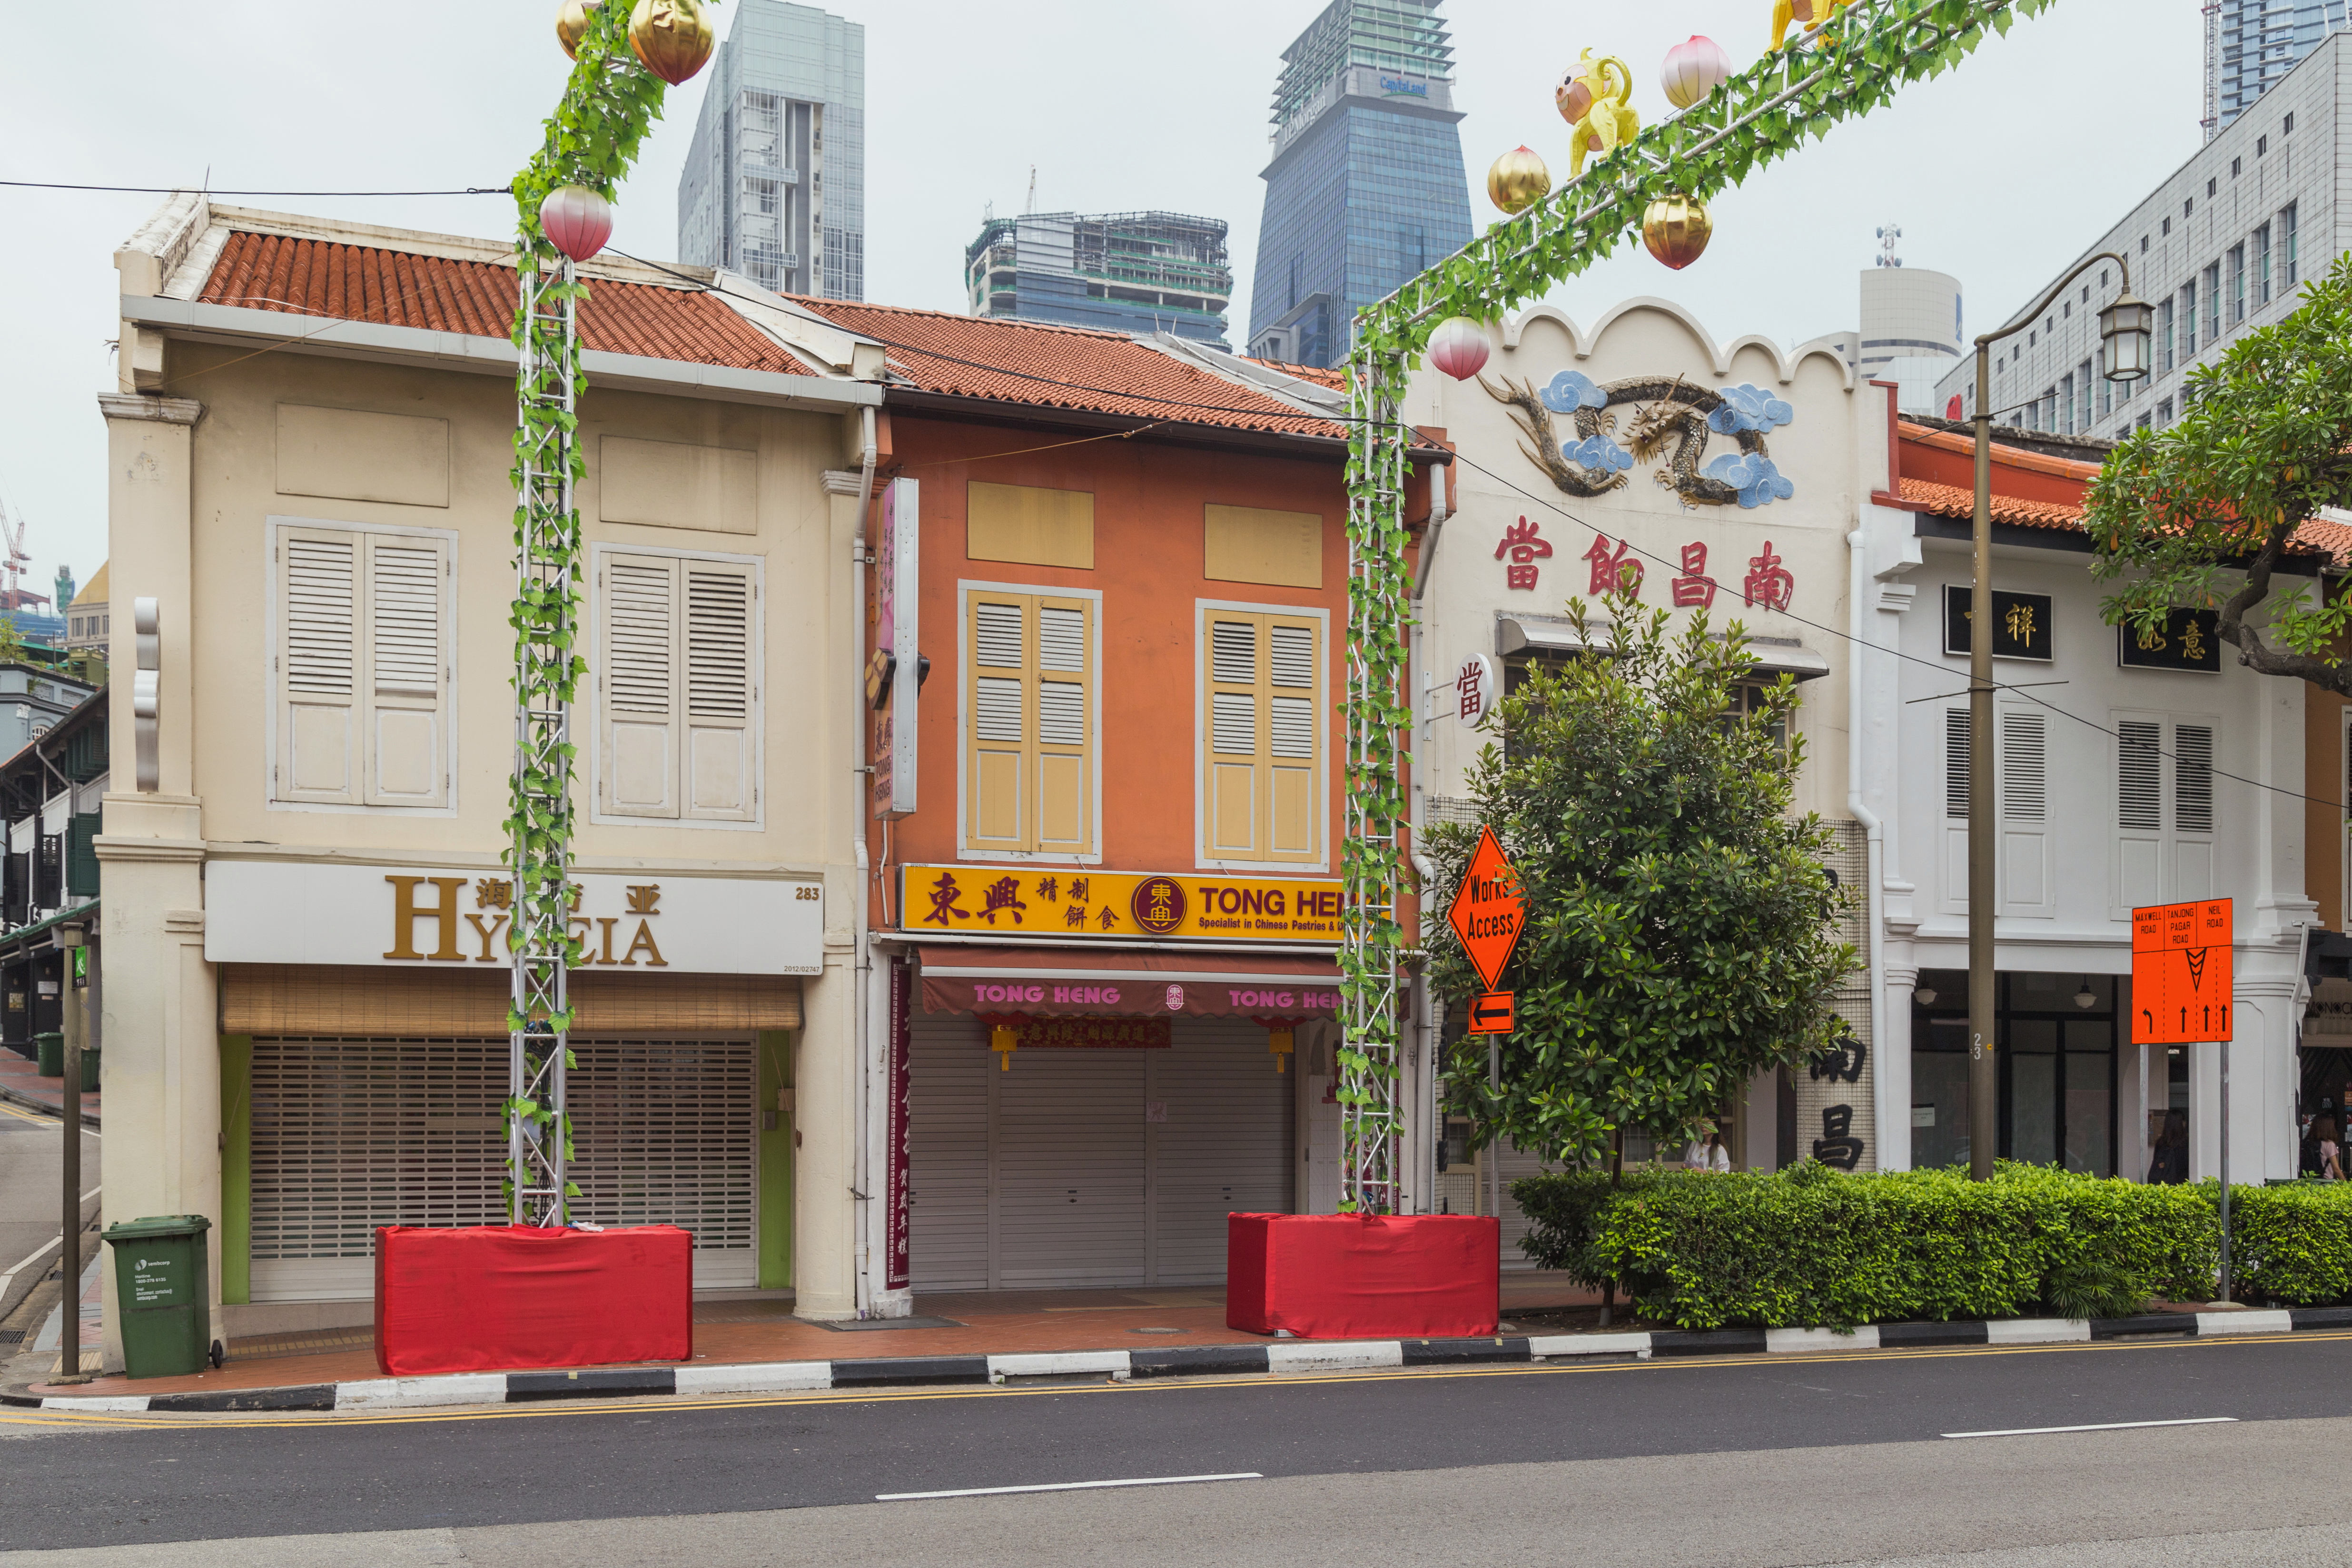 2016 Singapur, Chinatown, Ulica South Bridge, Domy-sklepy (11)